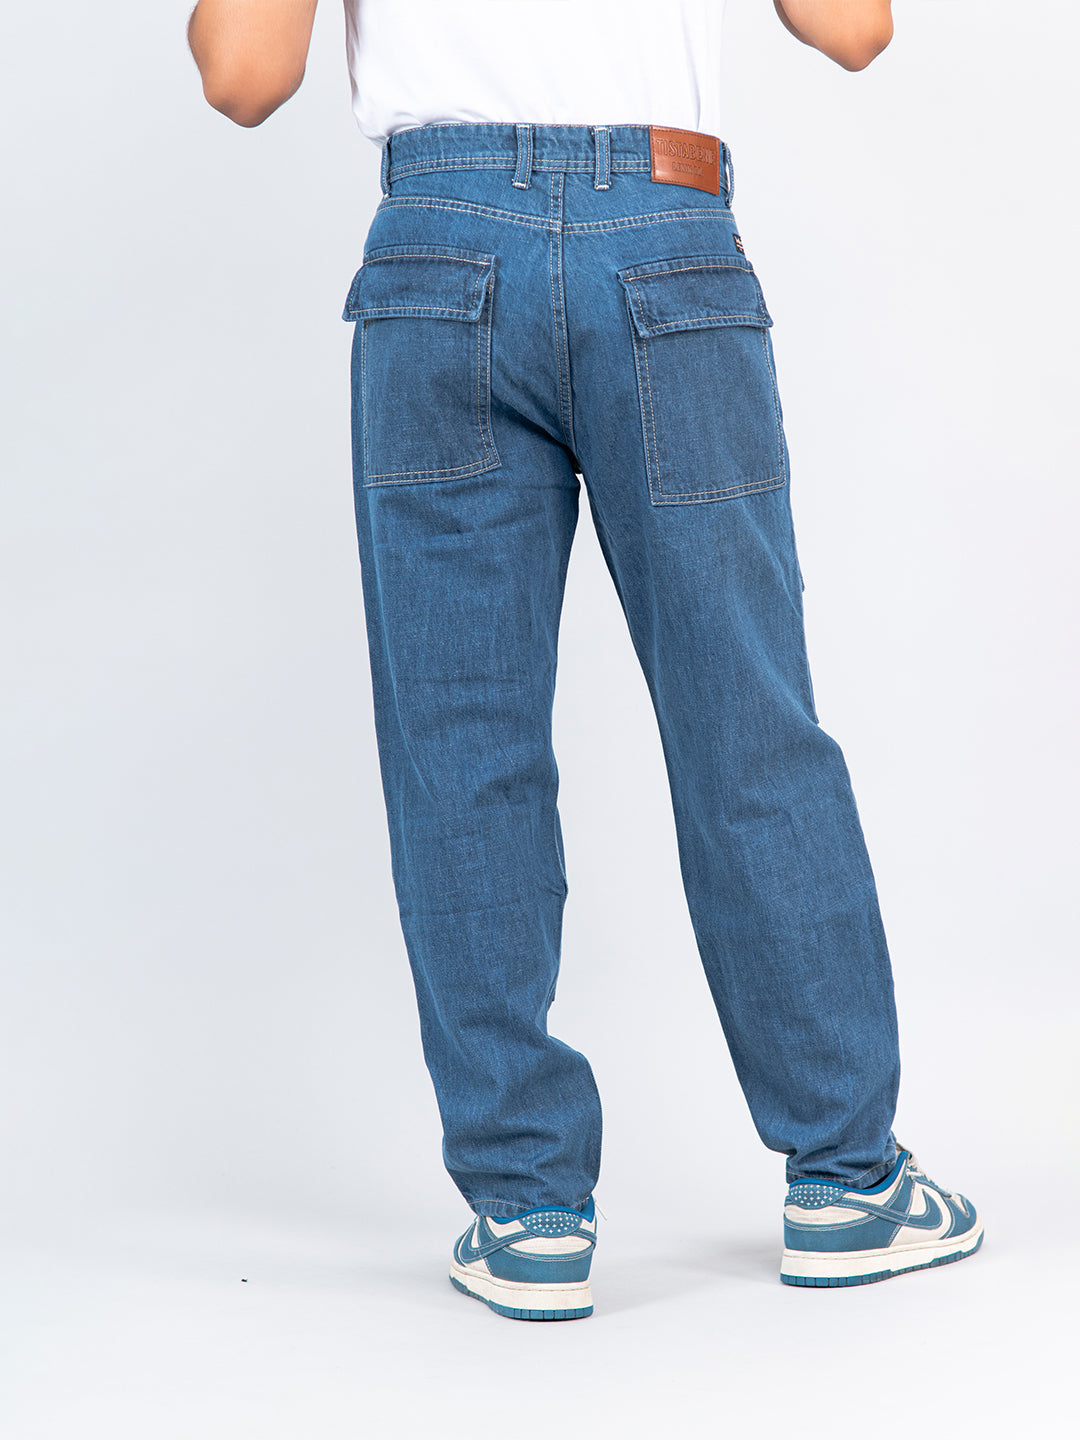 Washed Denim Cargo Pants Collection for Men | RADPRESENT